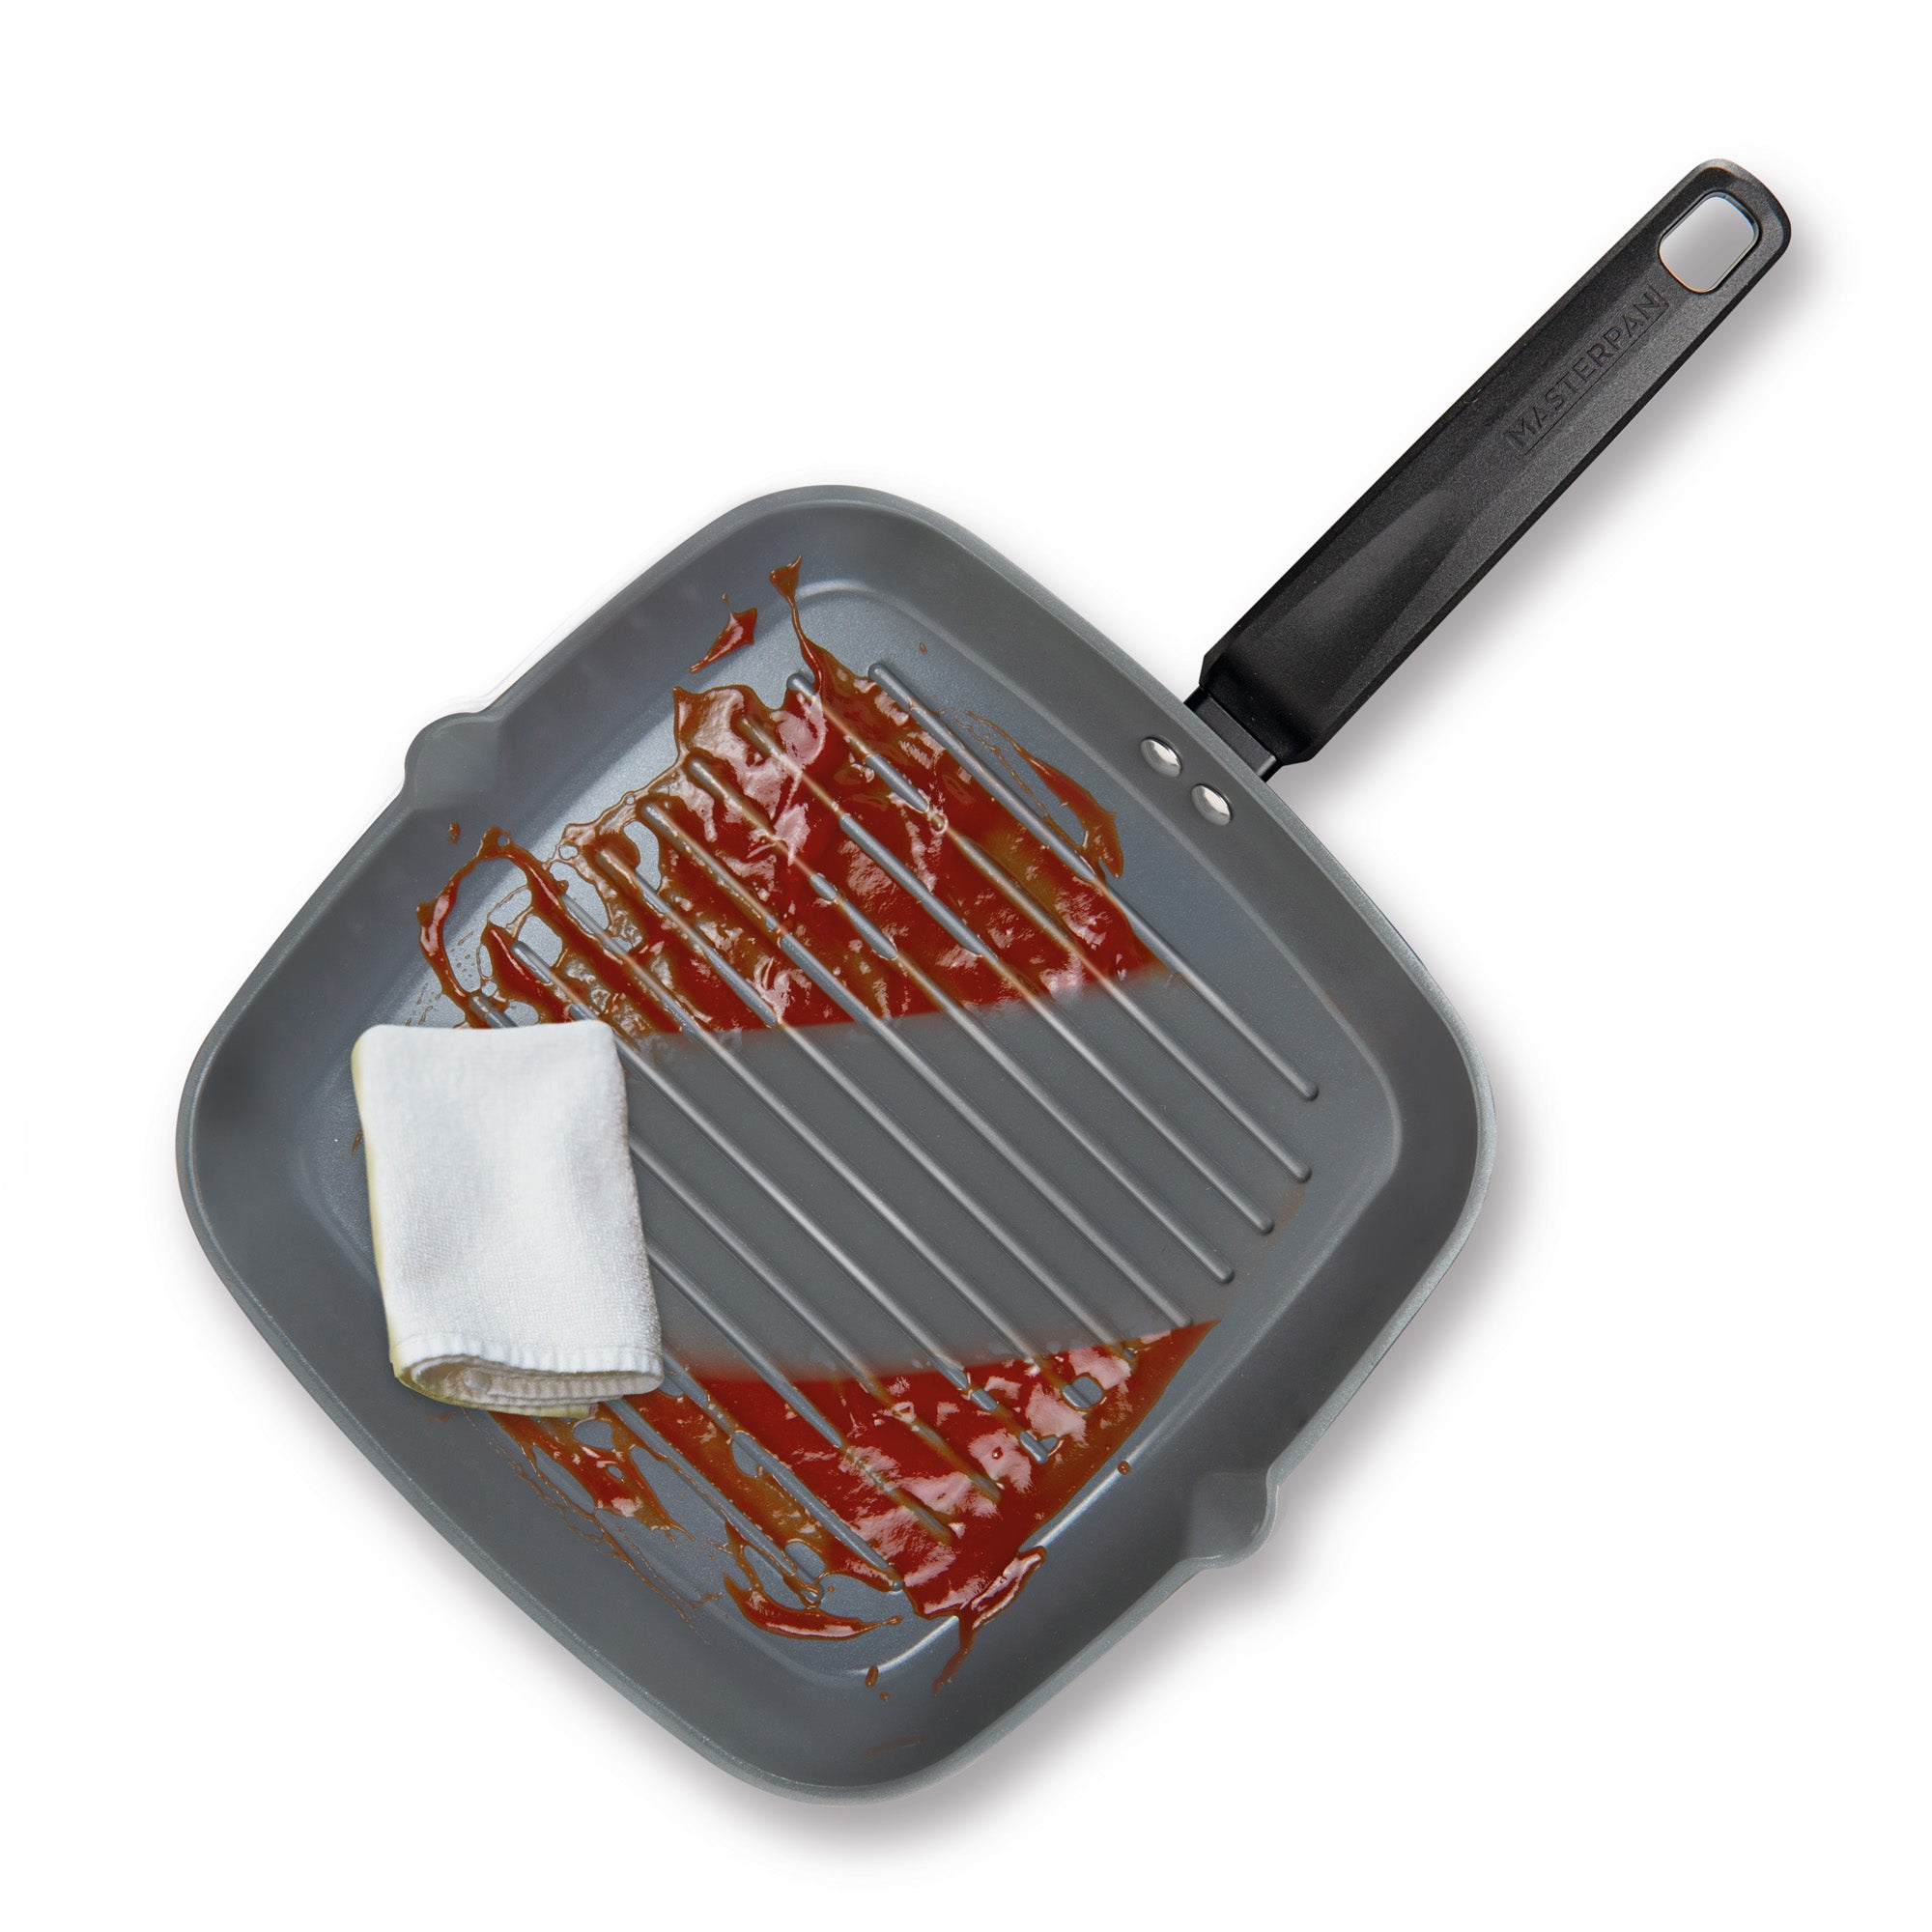 GRILL PAN, HEALTHY CERAMIC NON-STICK ALUMINIUM COOKWARE WITH BAKELITE HANDLE, 10” (25cm)